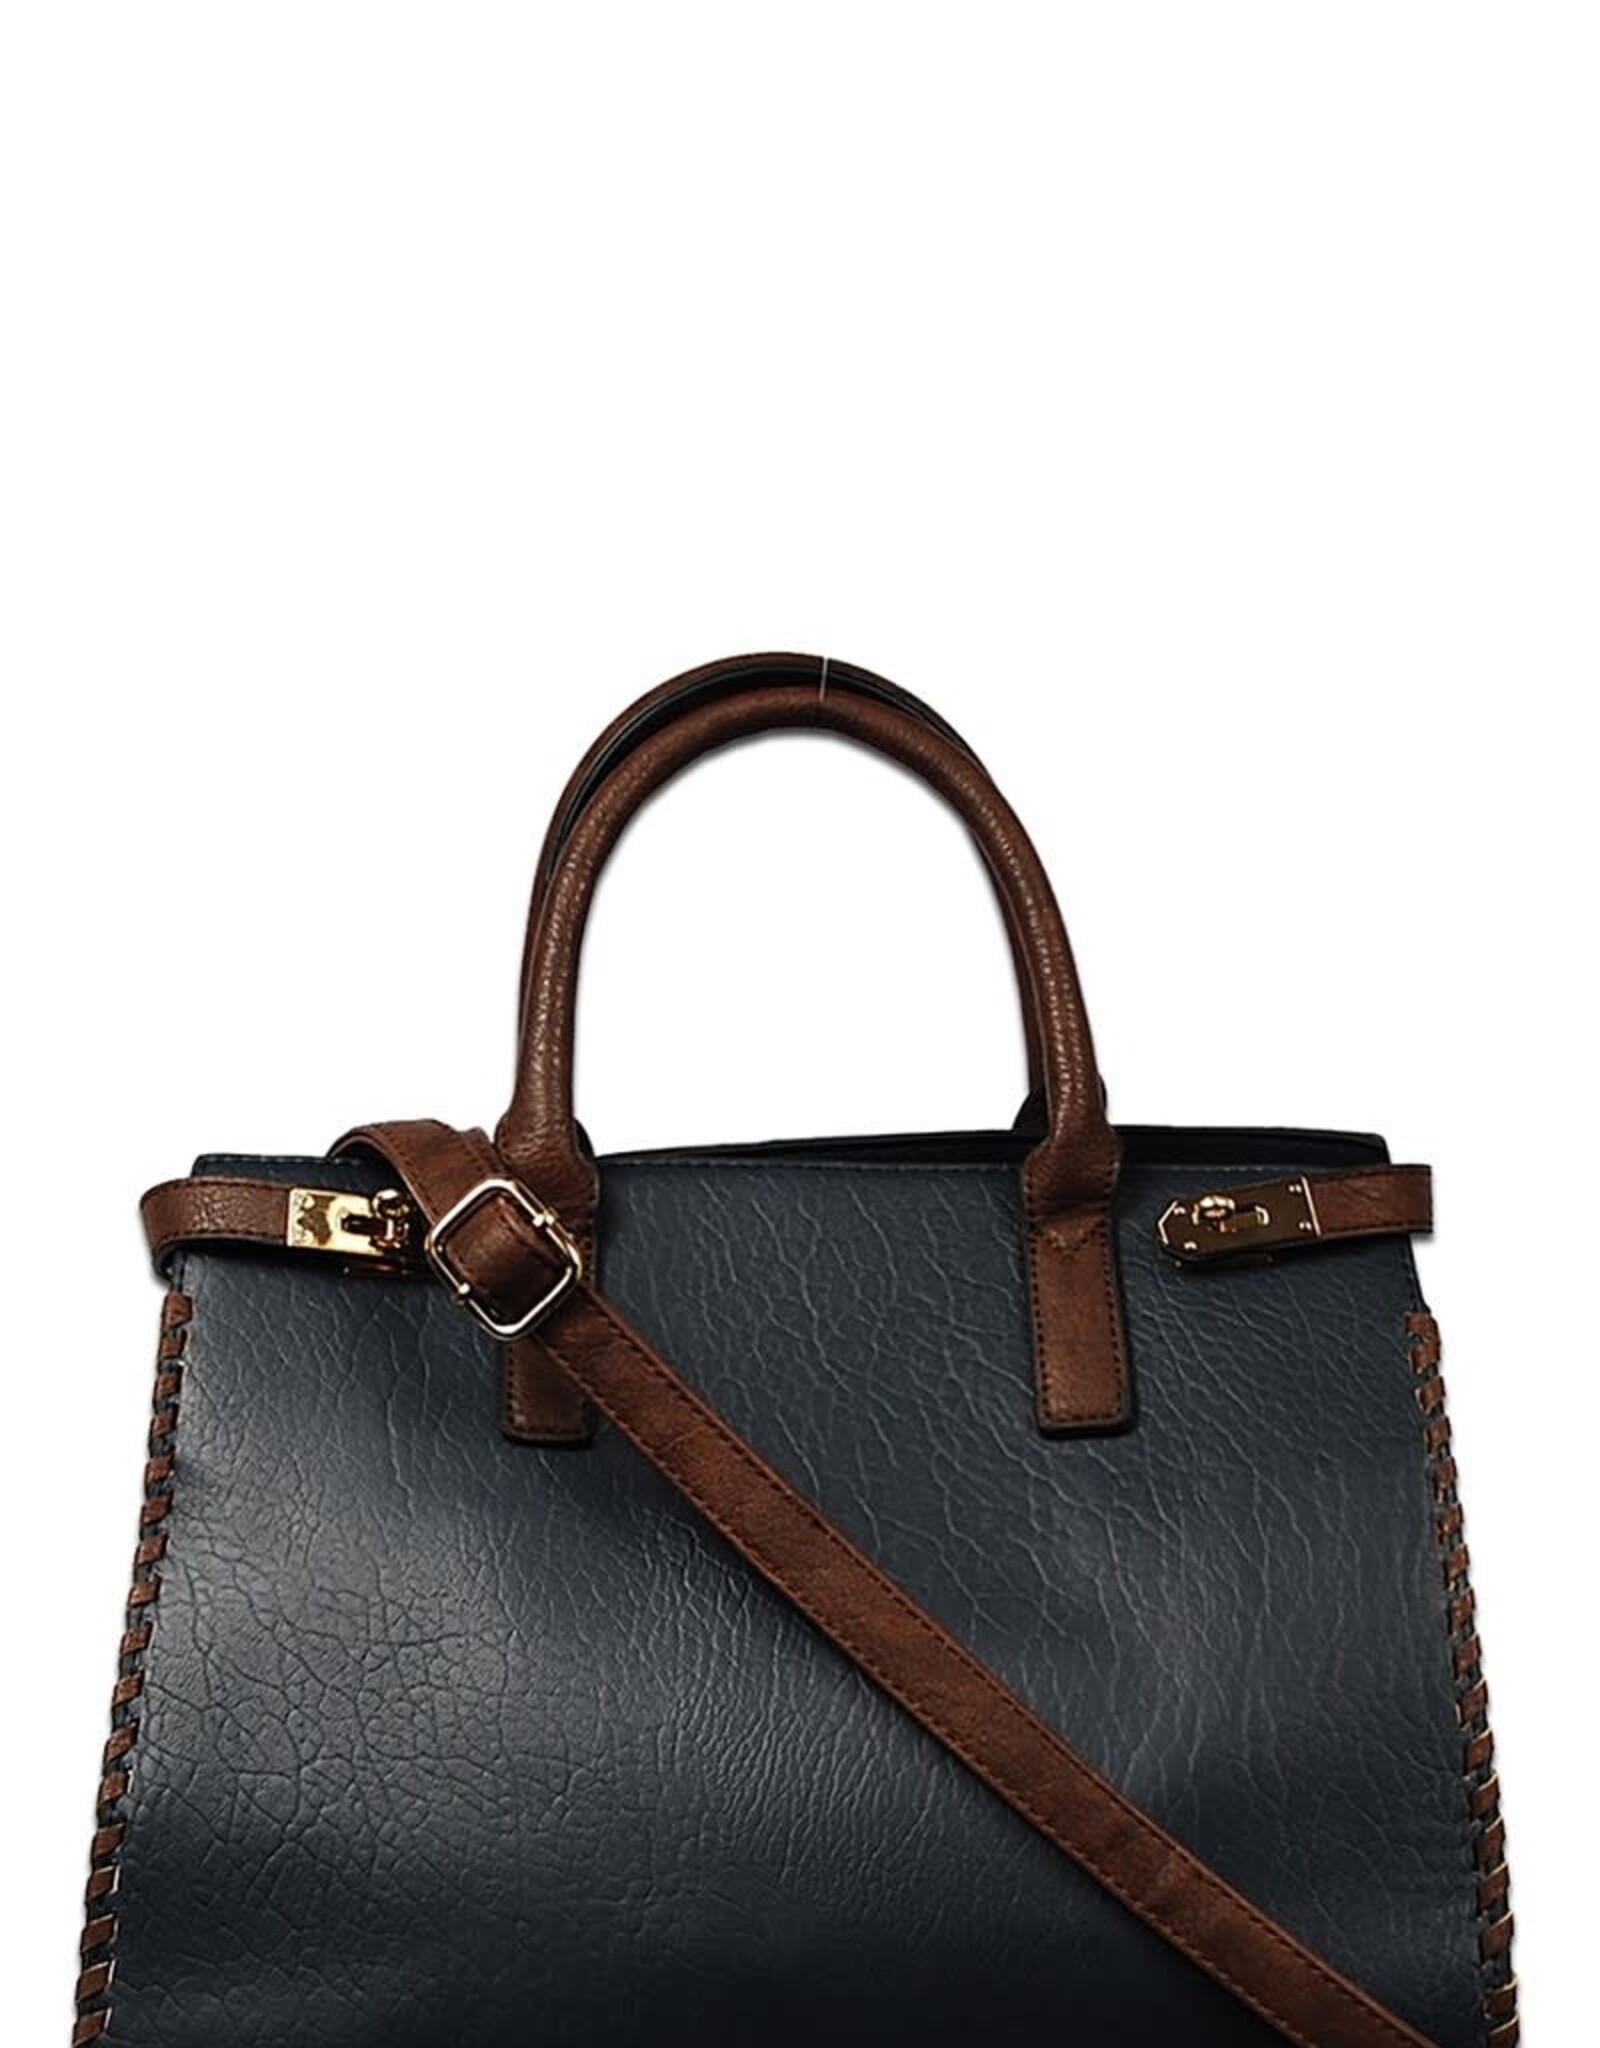 Bag Boutique Leona Handle Bag - Navy & Brown